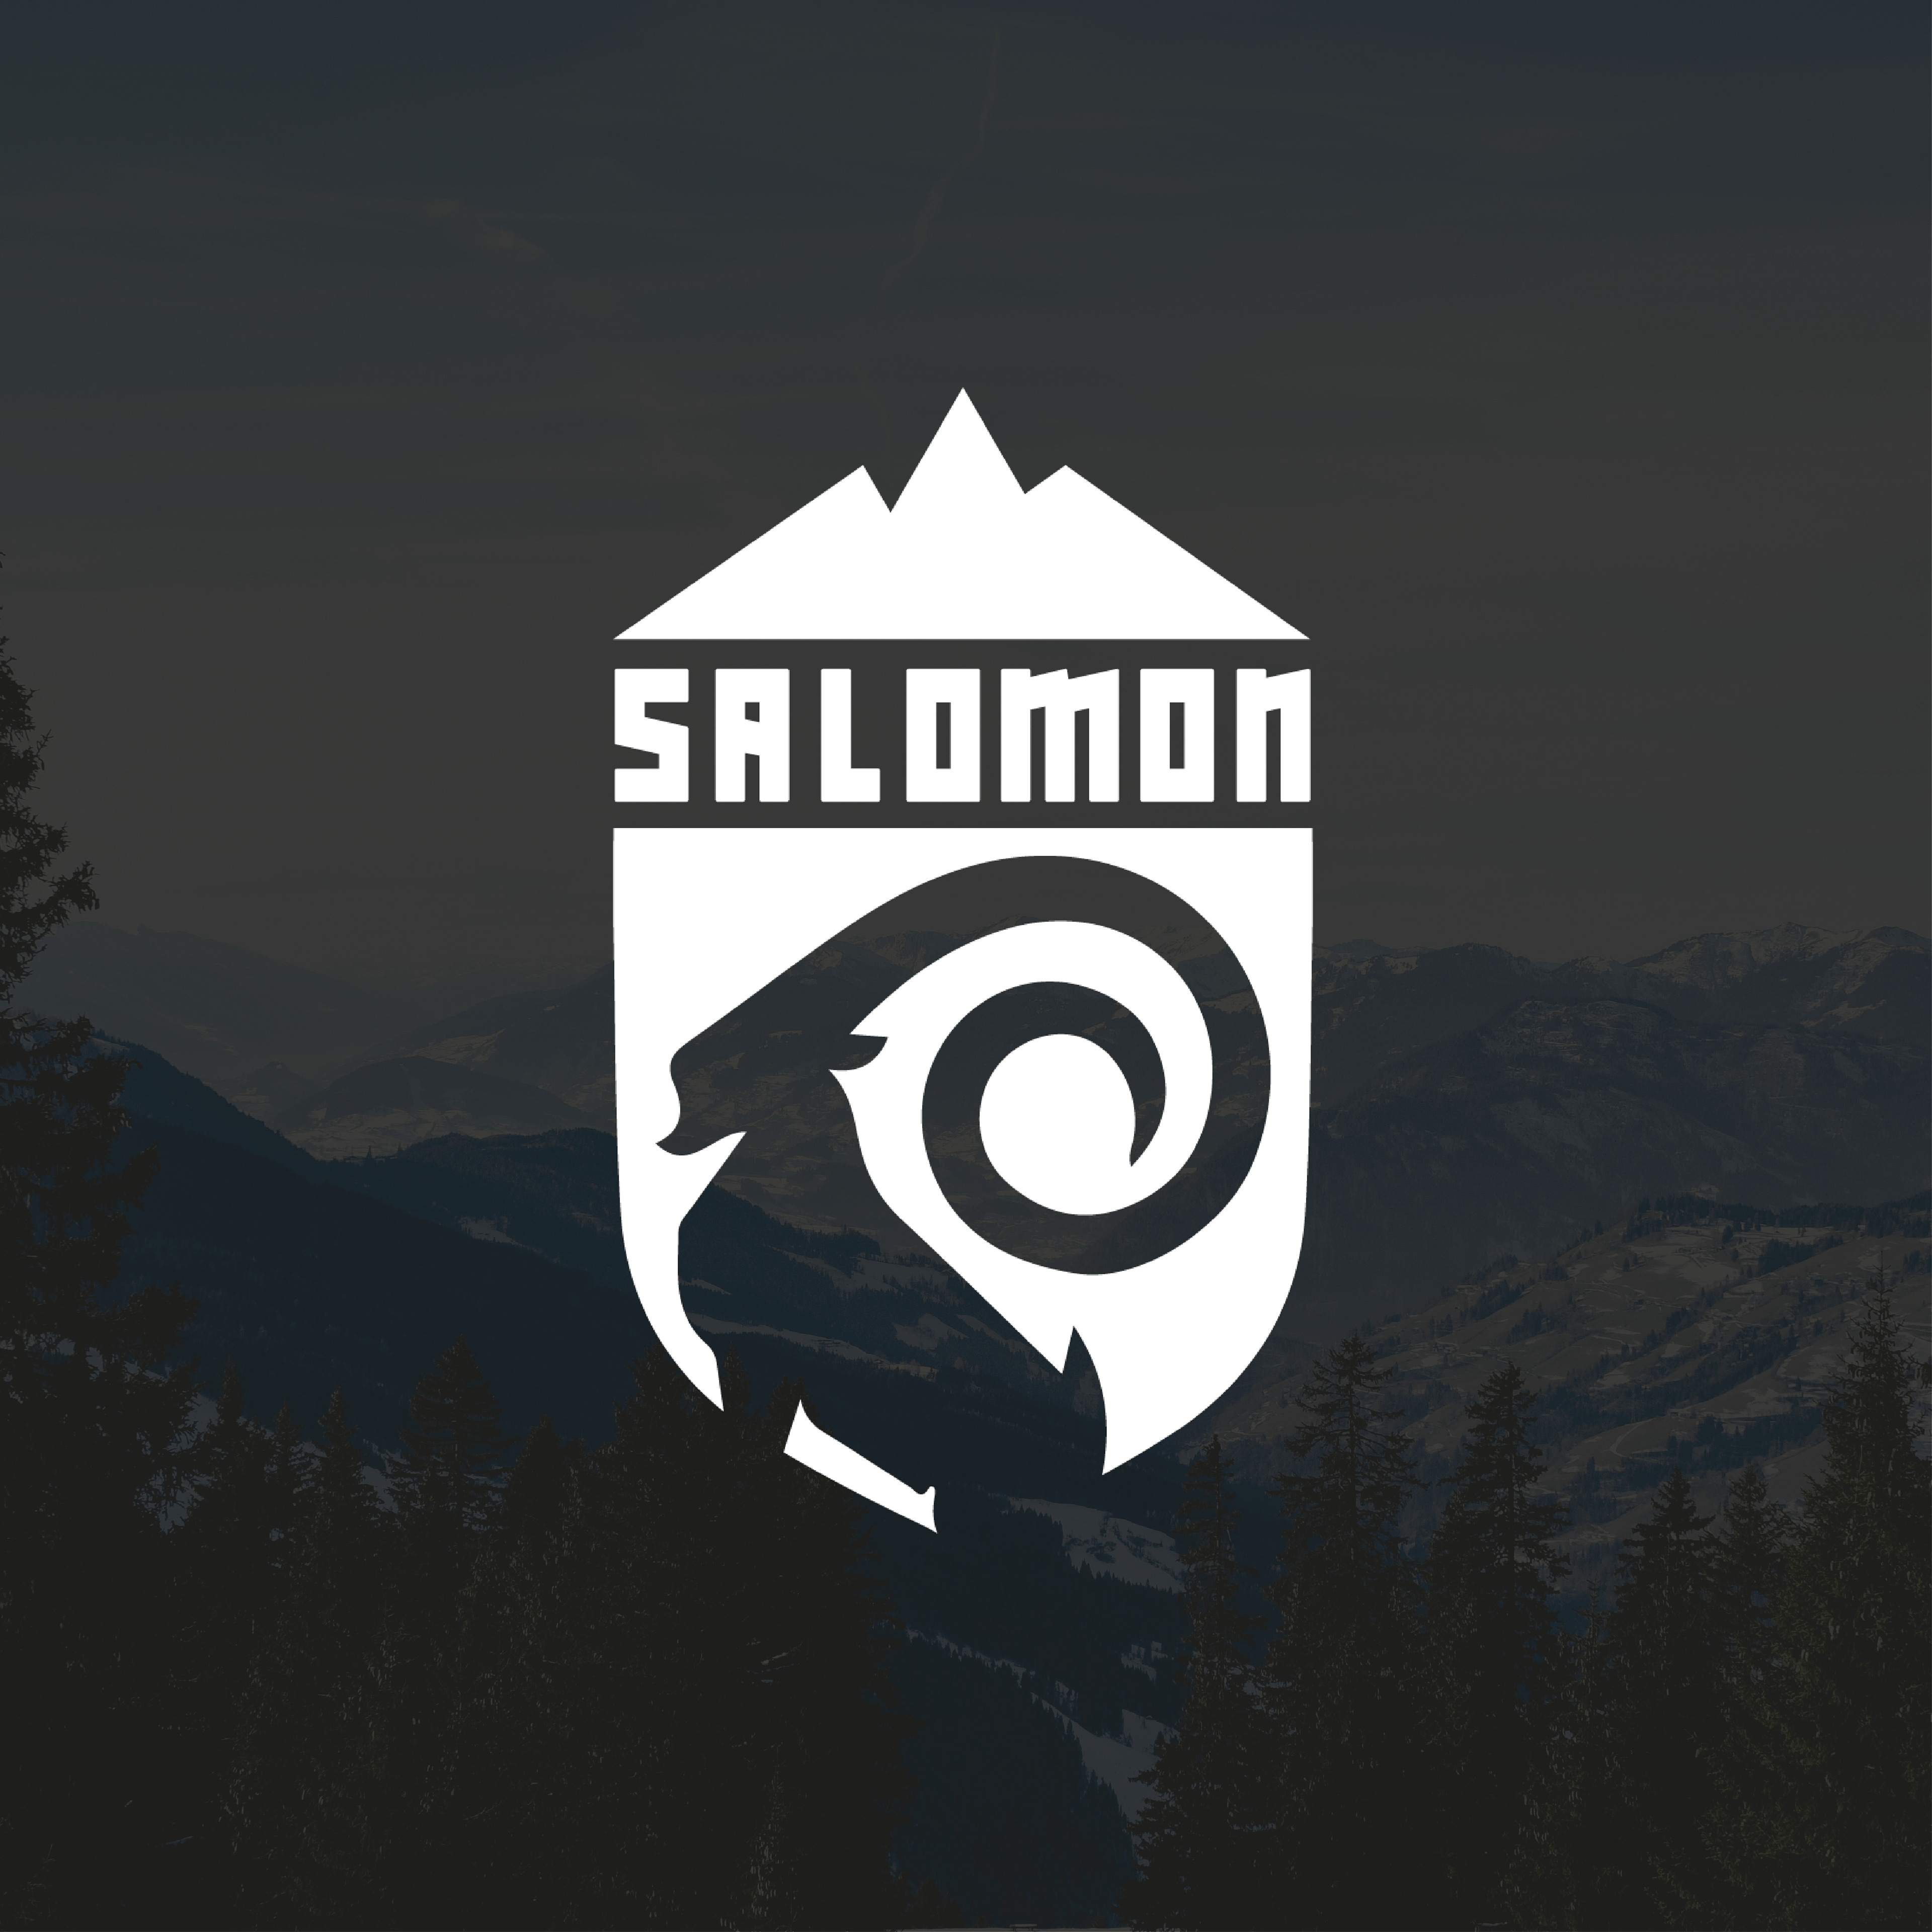 Salomon Logo - Bryan CHAUMINE - Salomon Logo rebuilt 2017 #project